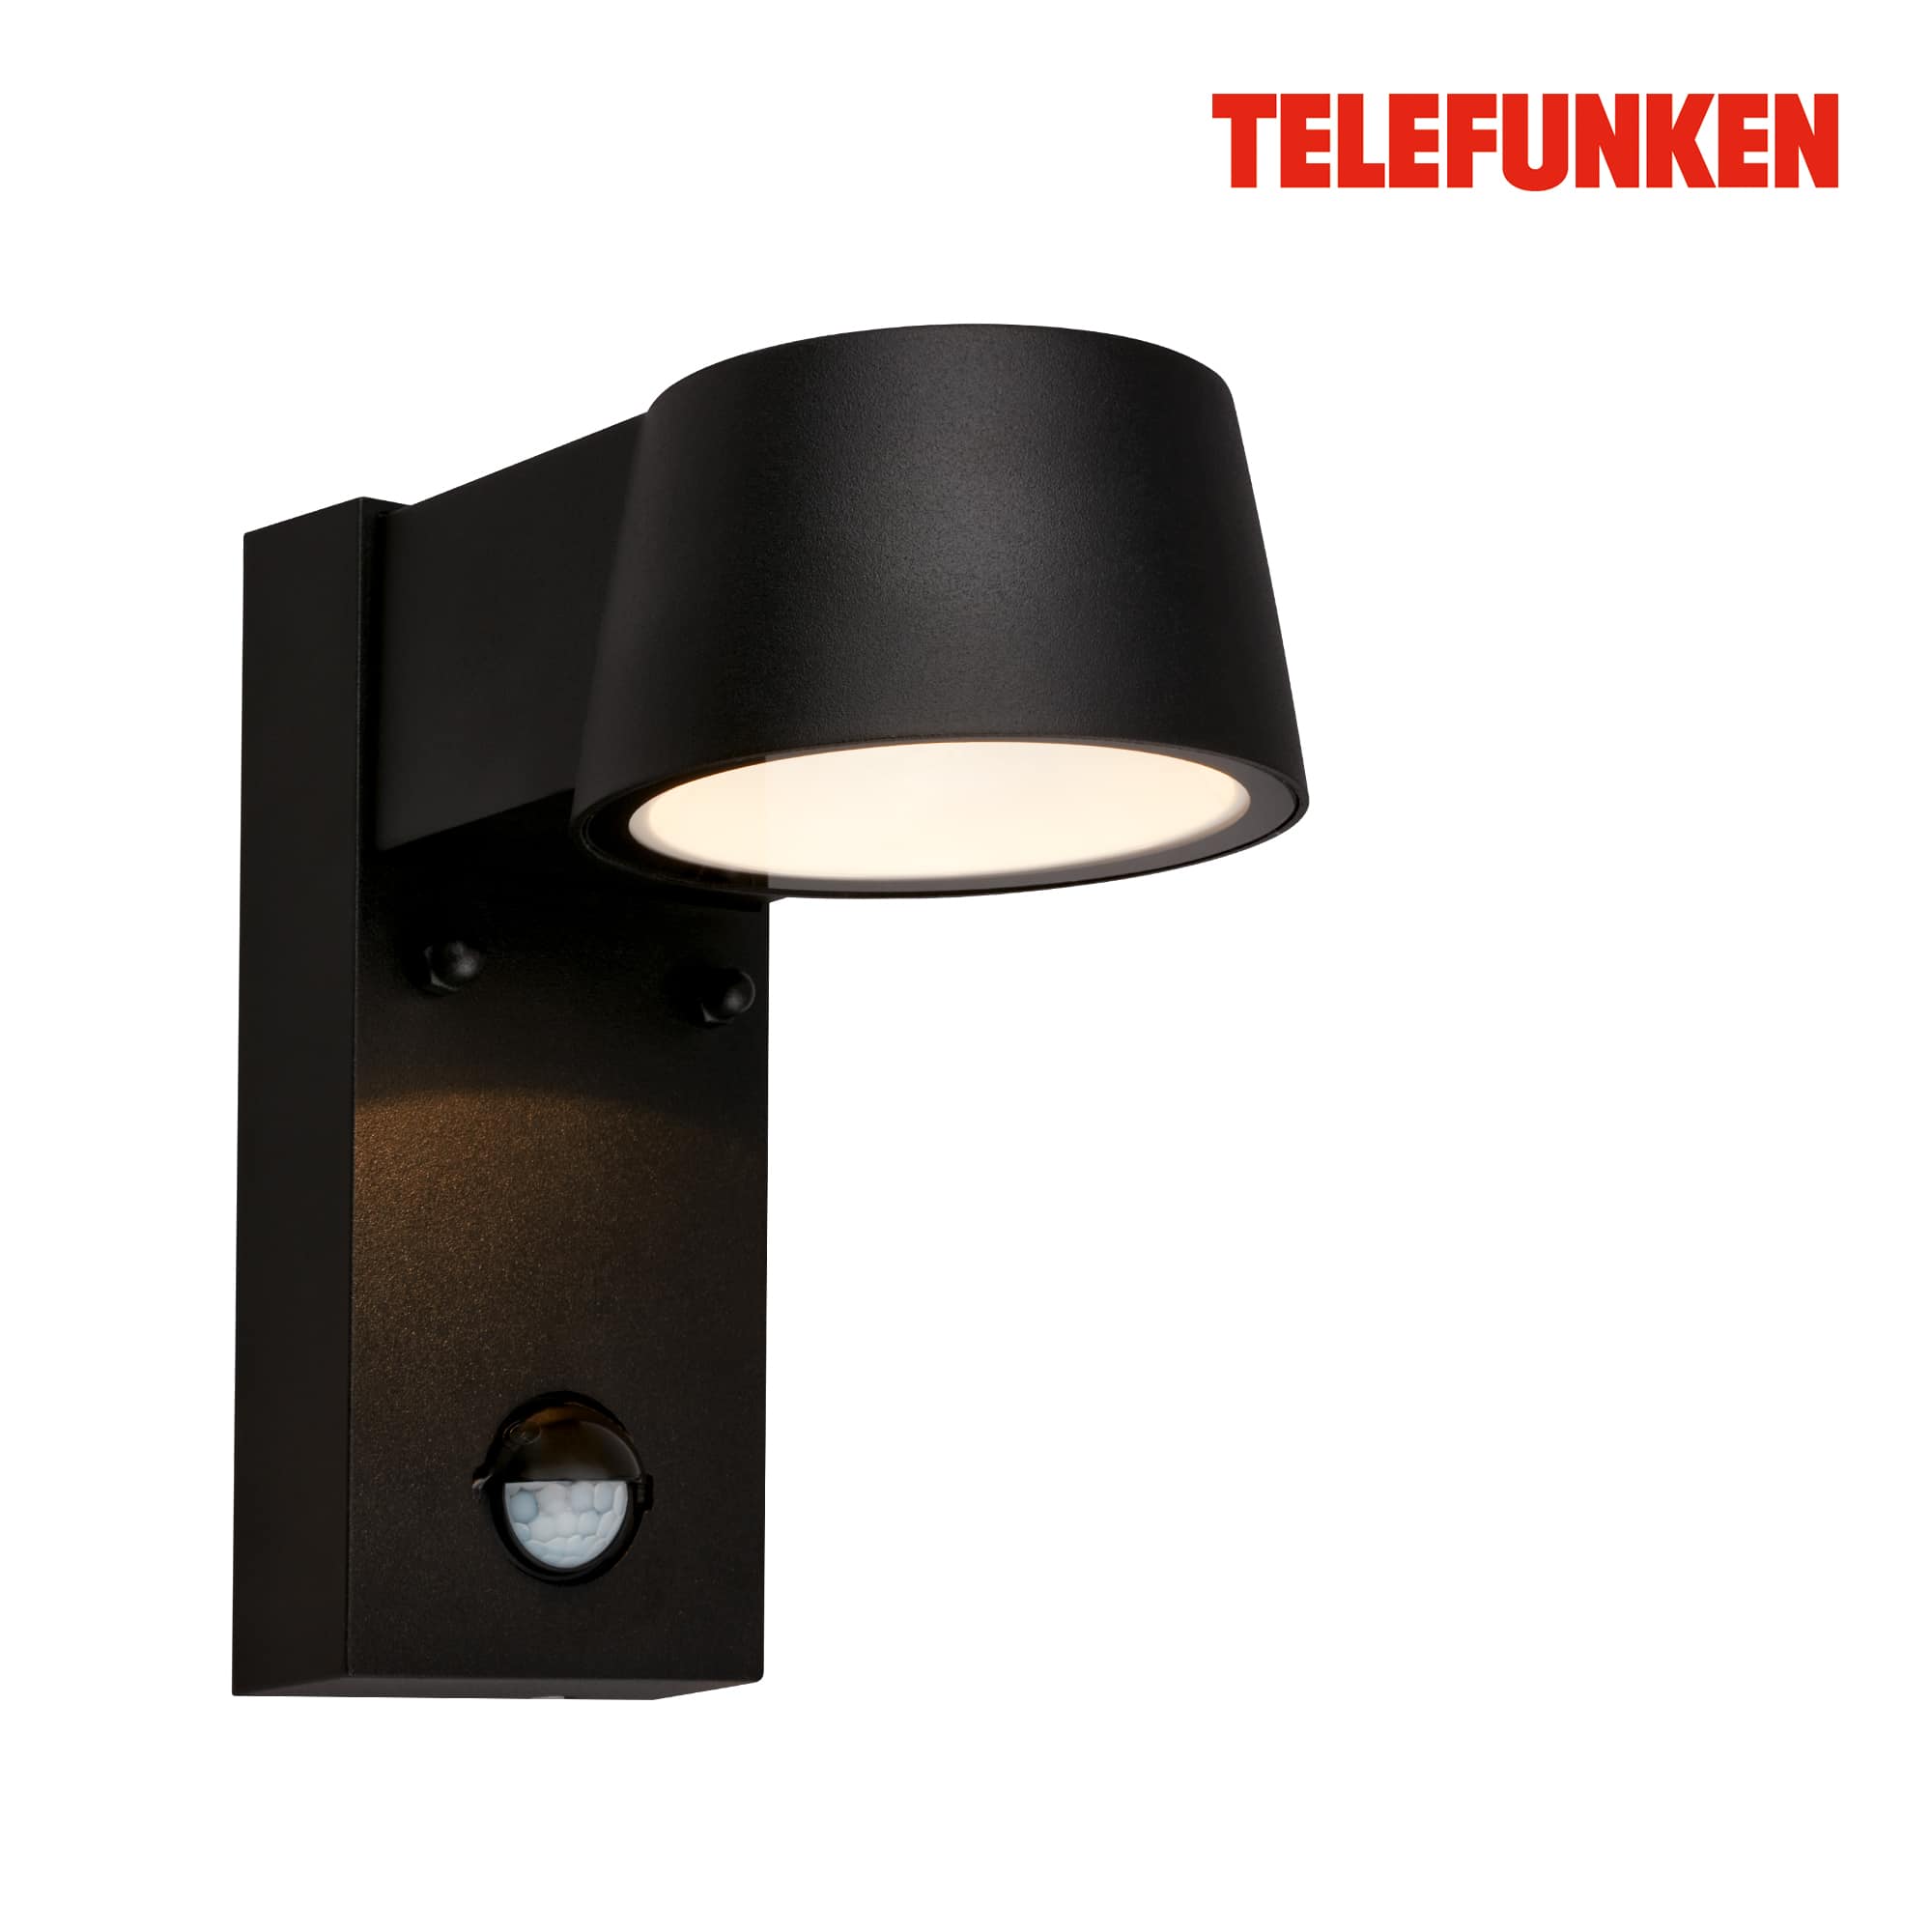 Telefunken LED wall lamp, motion detector, twilight sensor, black